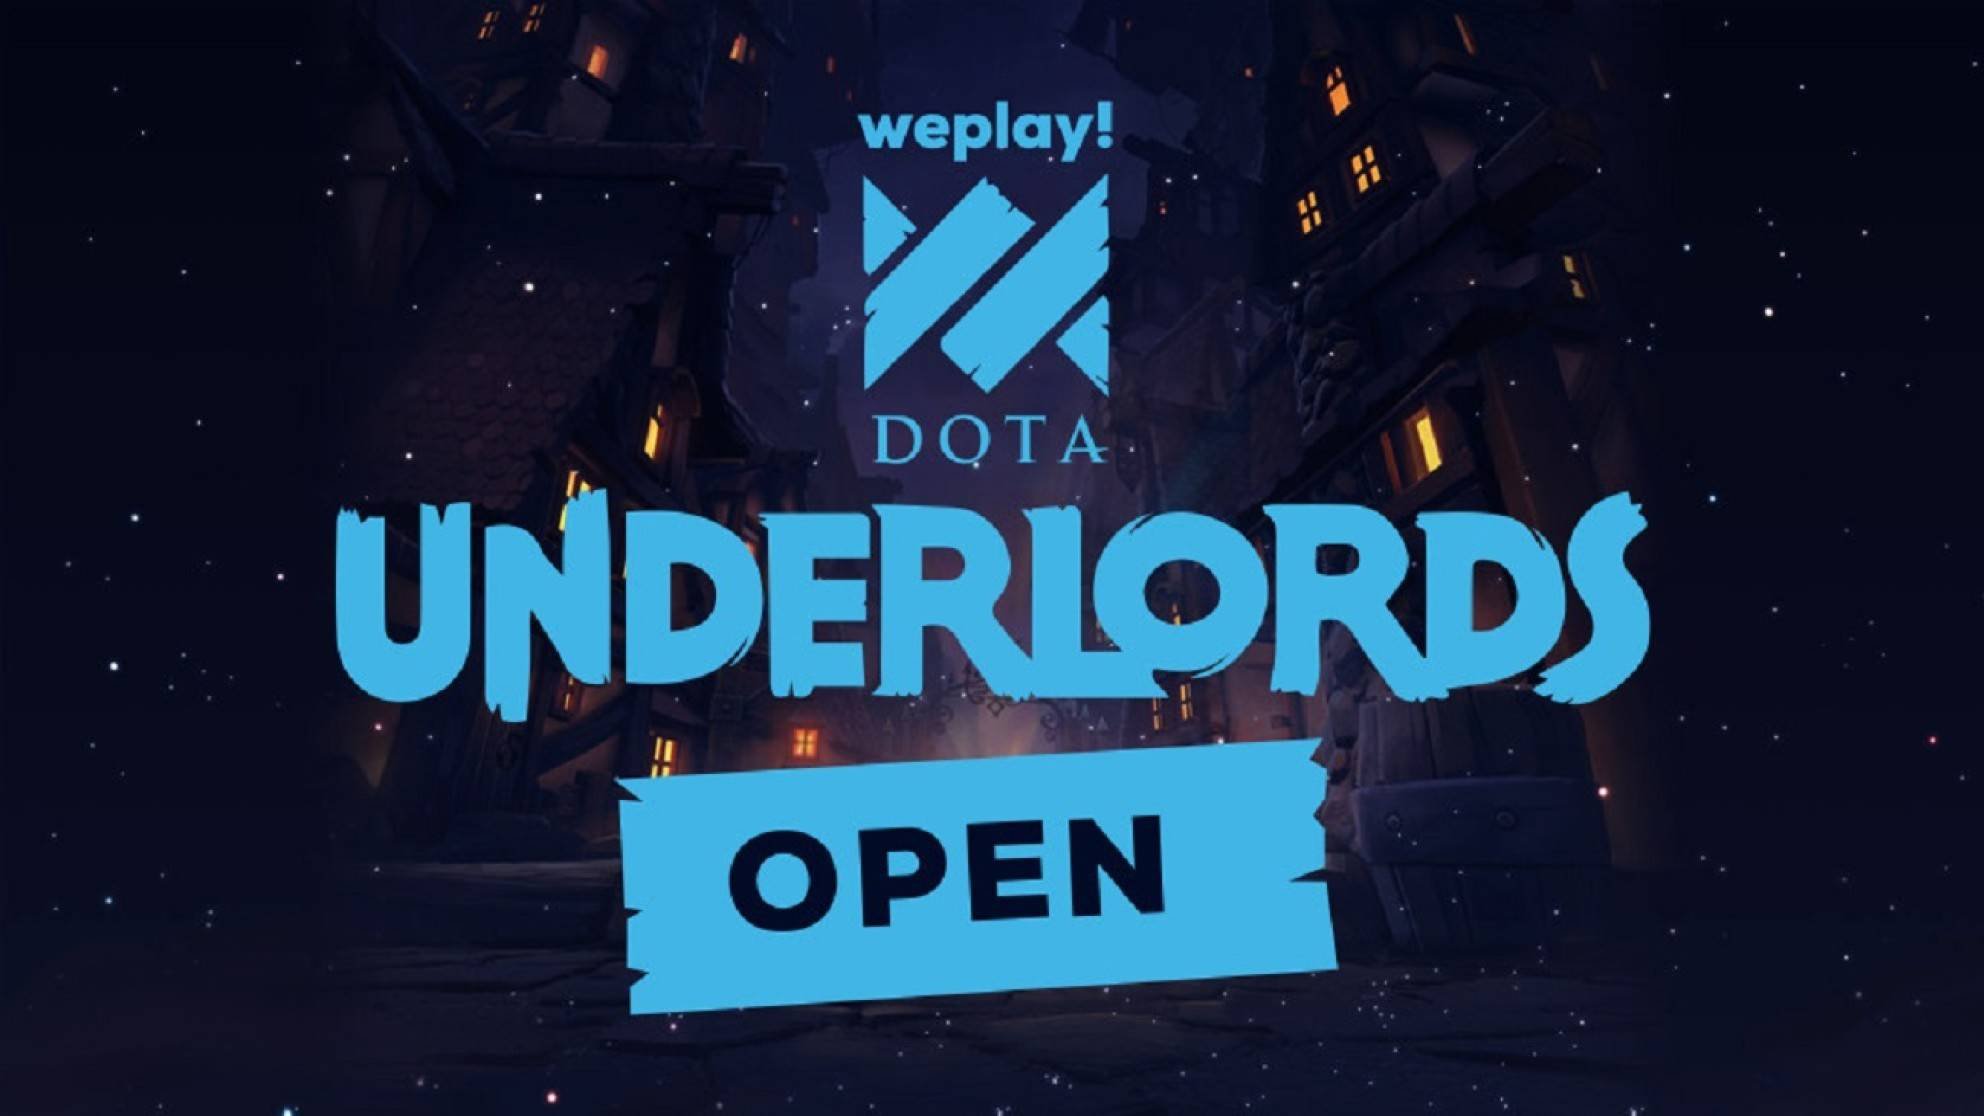 WePlay! Dota Underlords Open